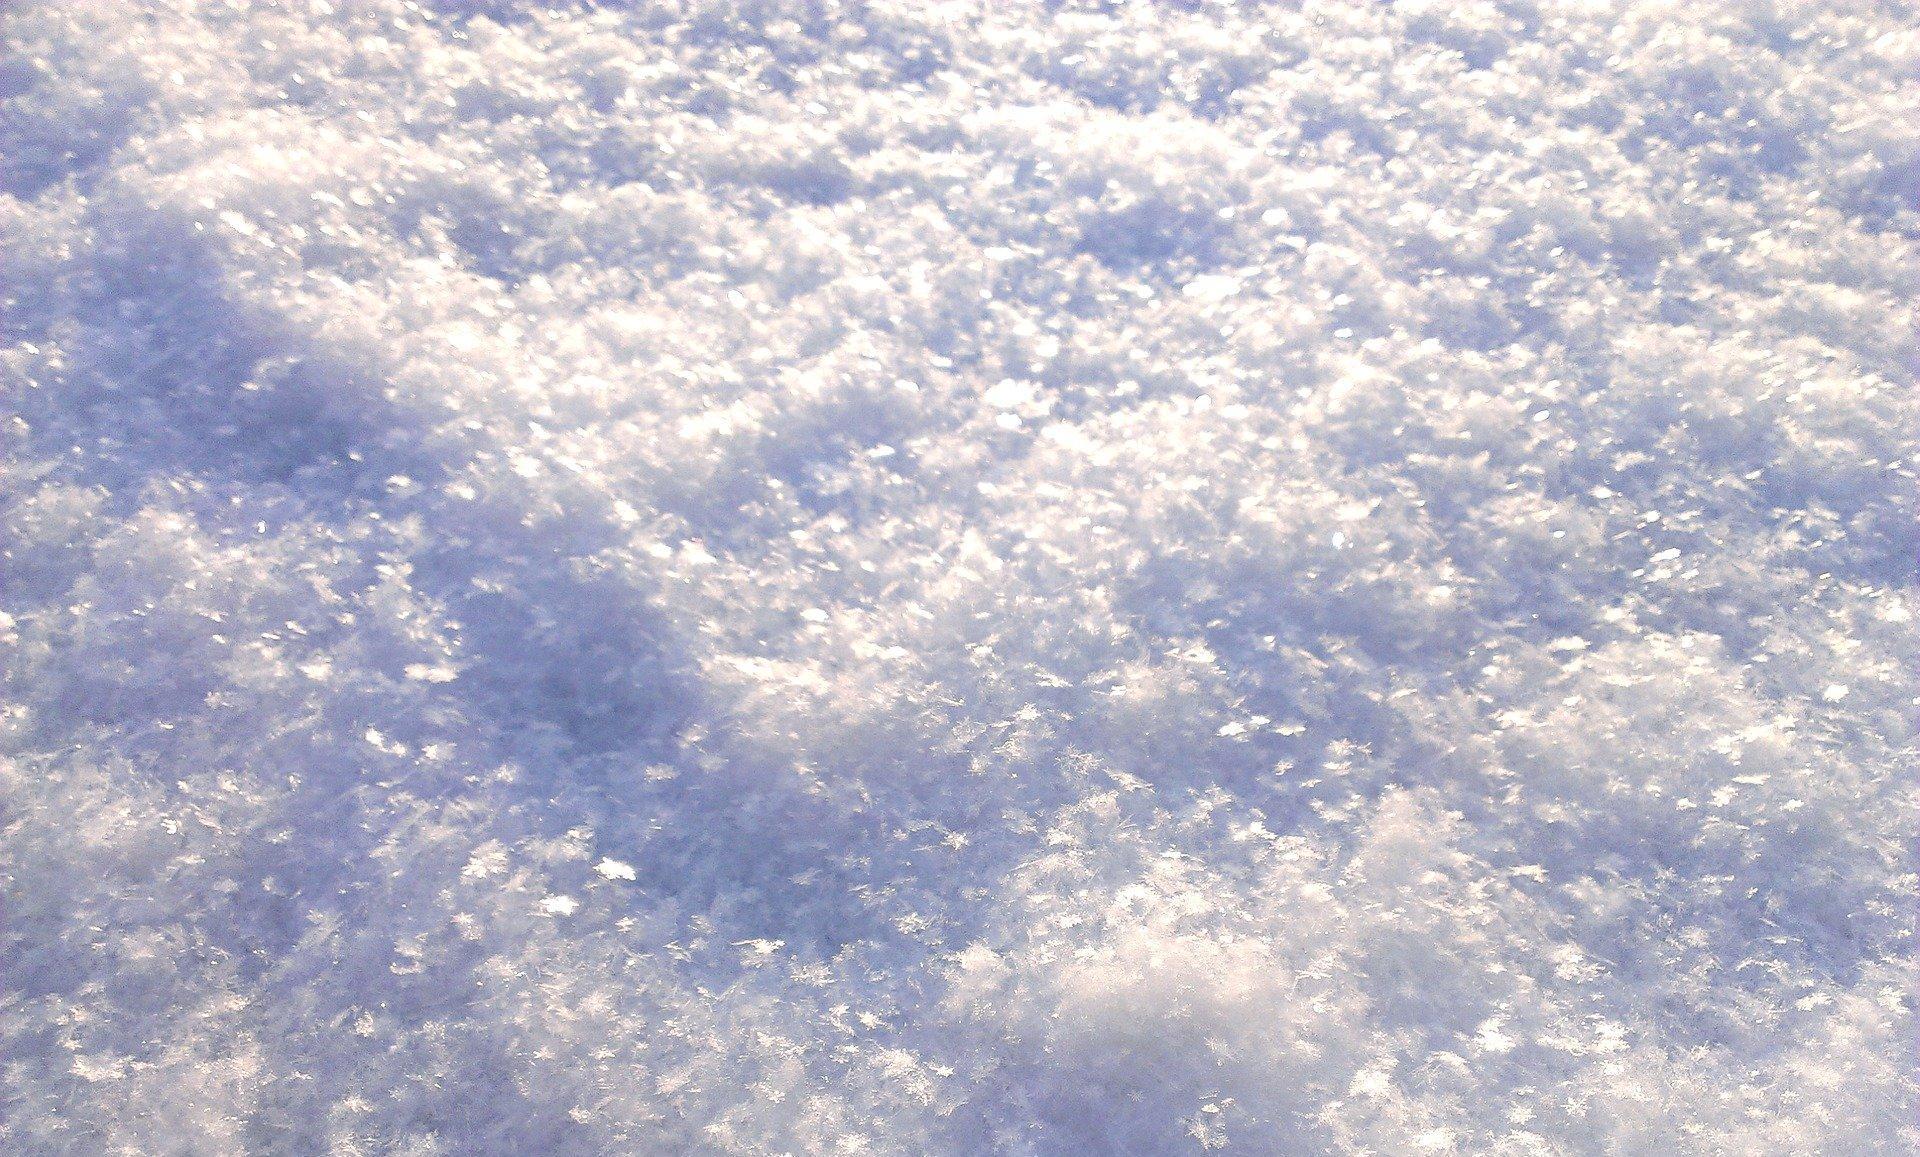 МЧС предупредило о снегопаде и метели в Прикамье